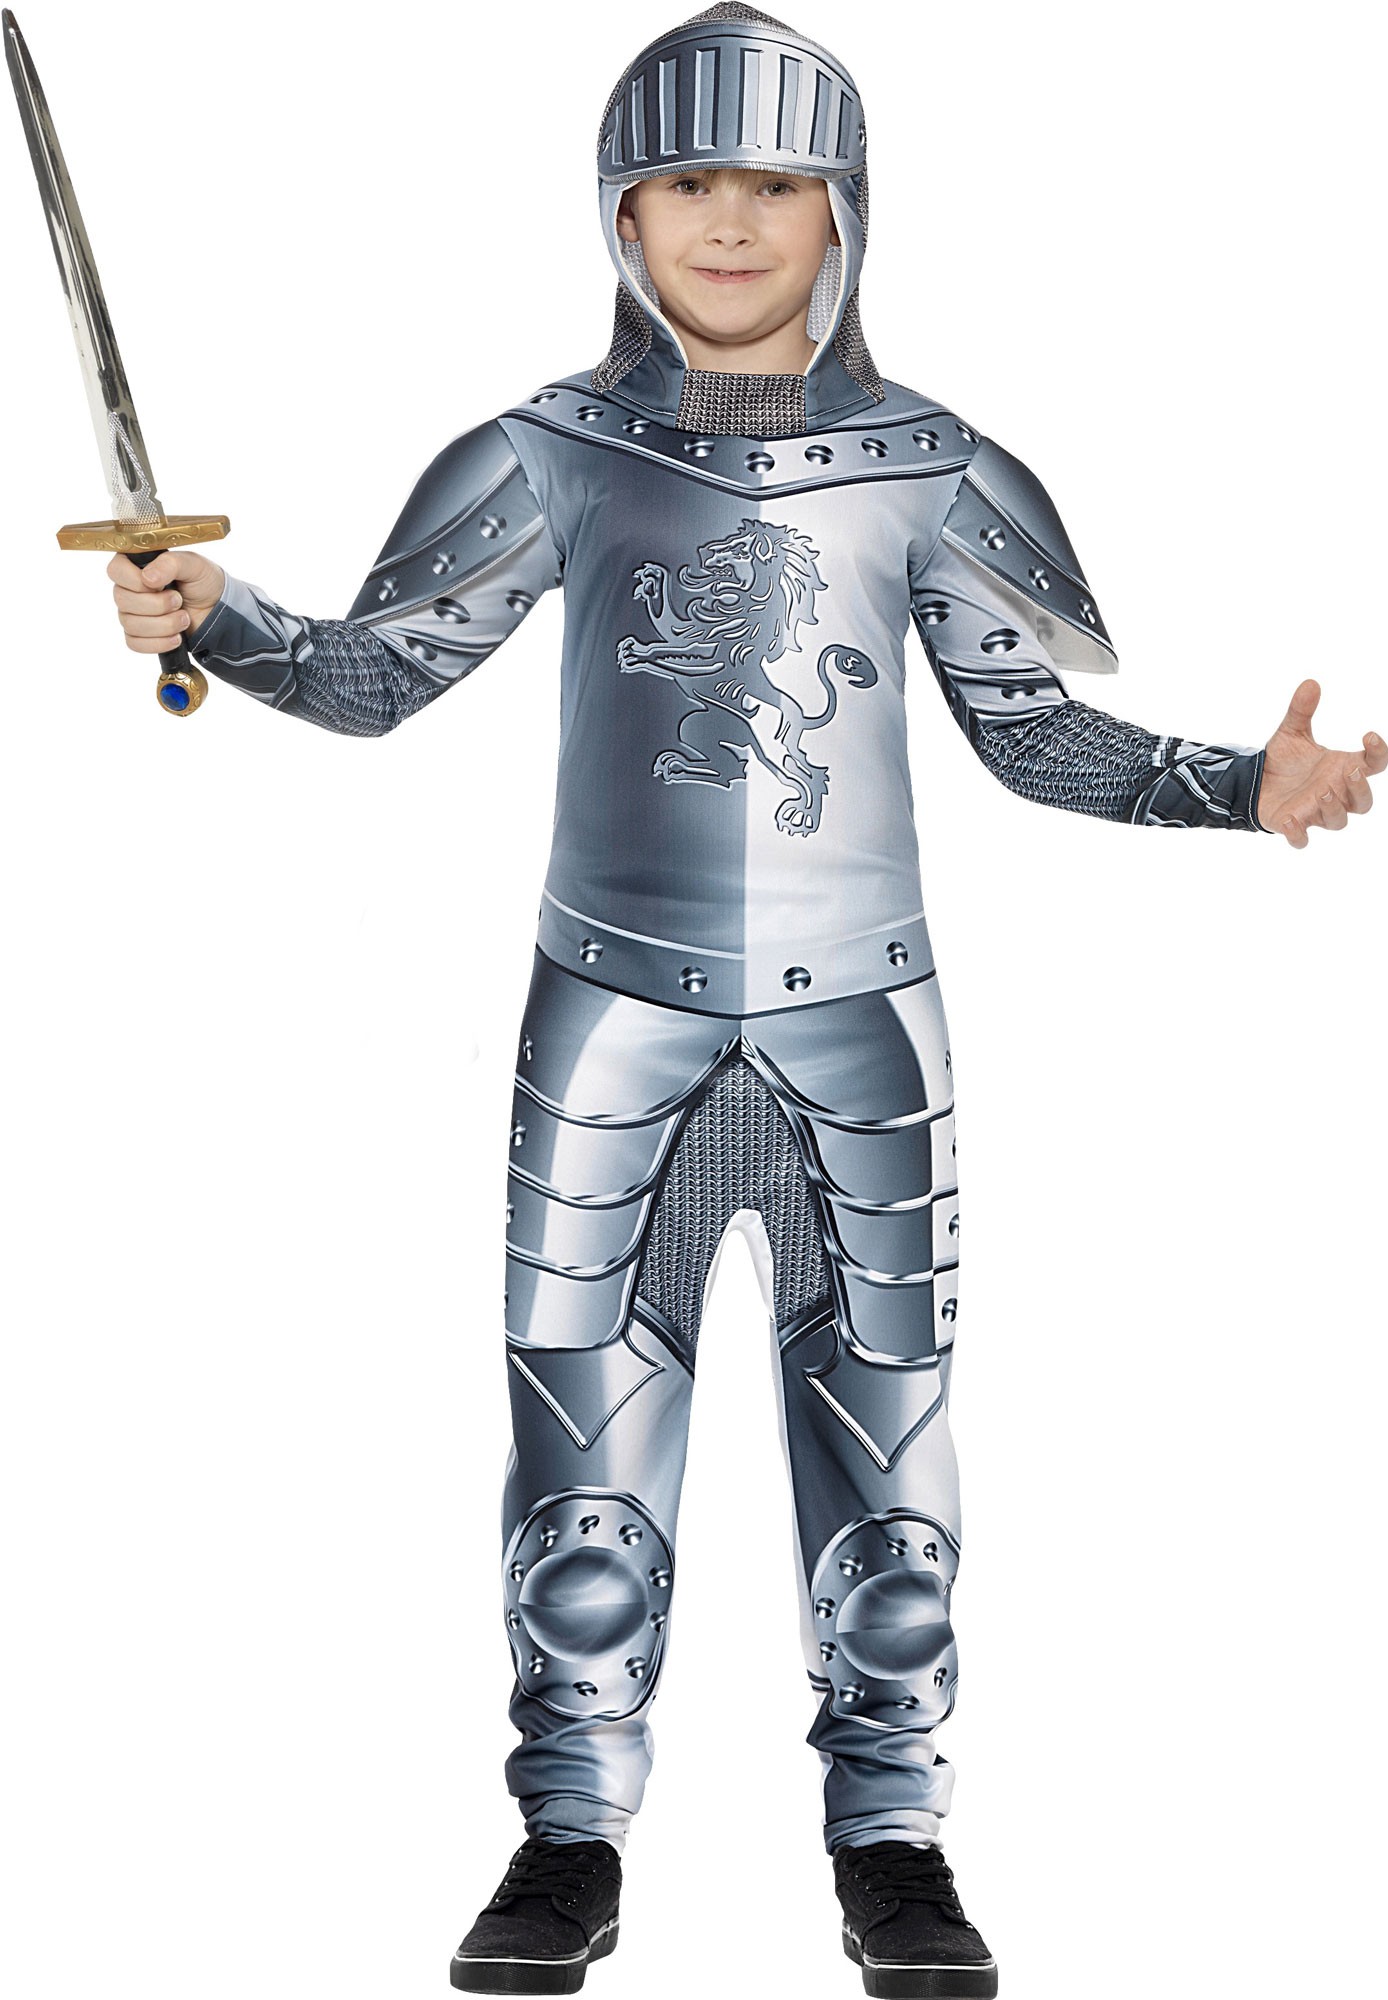 Brave knight child costume.